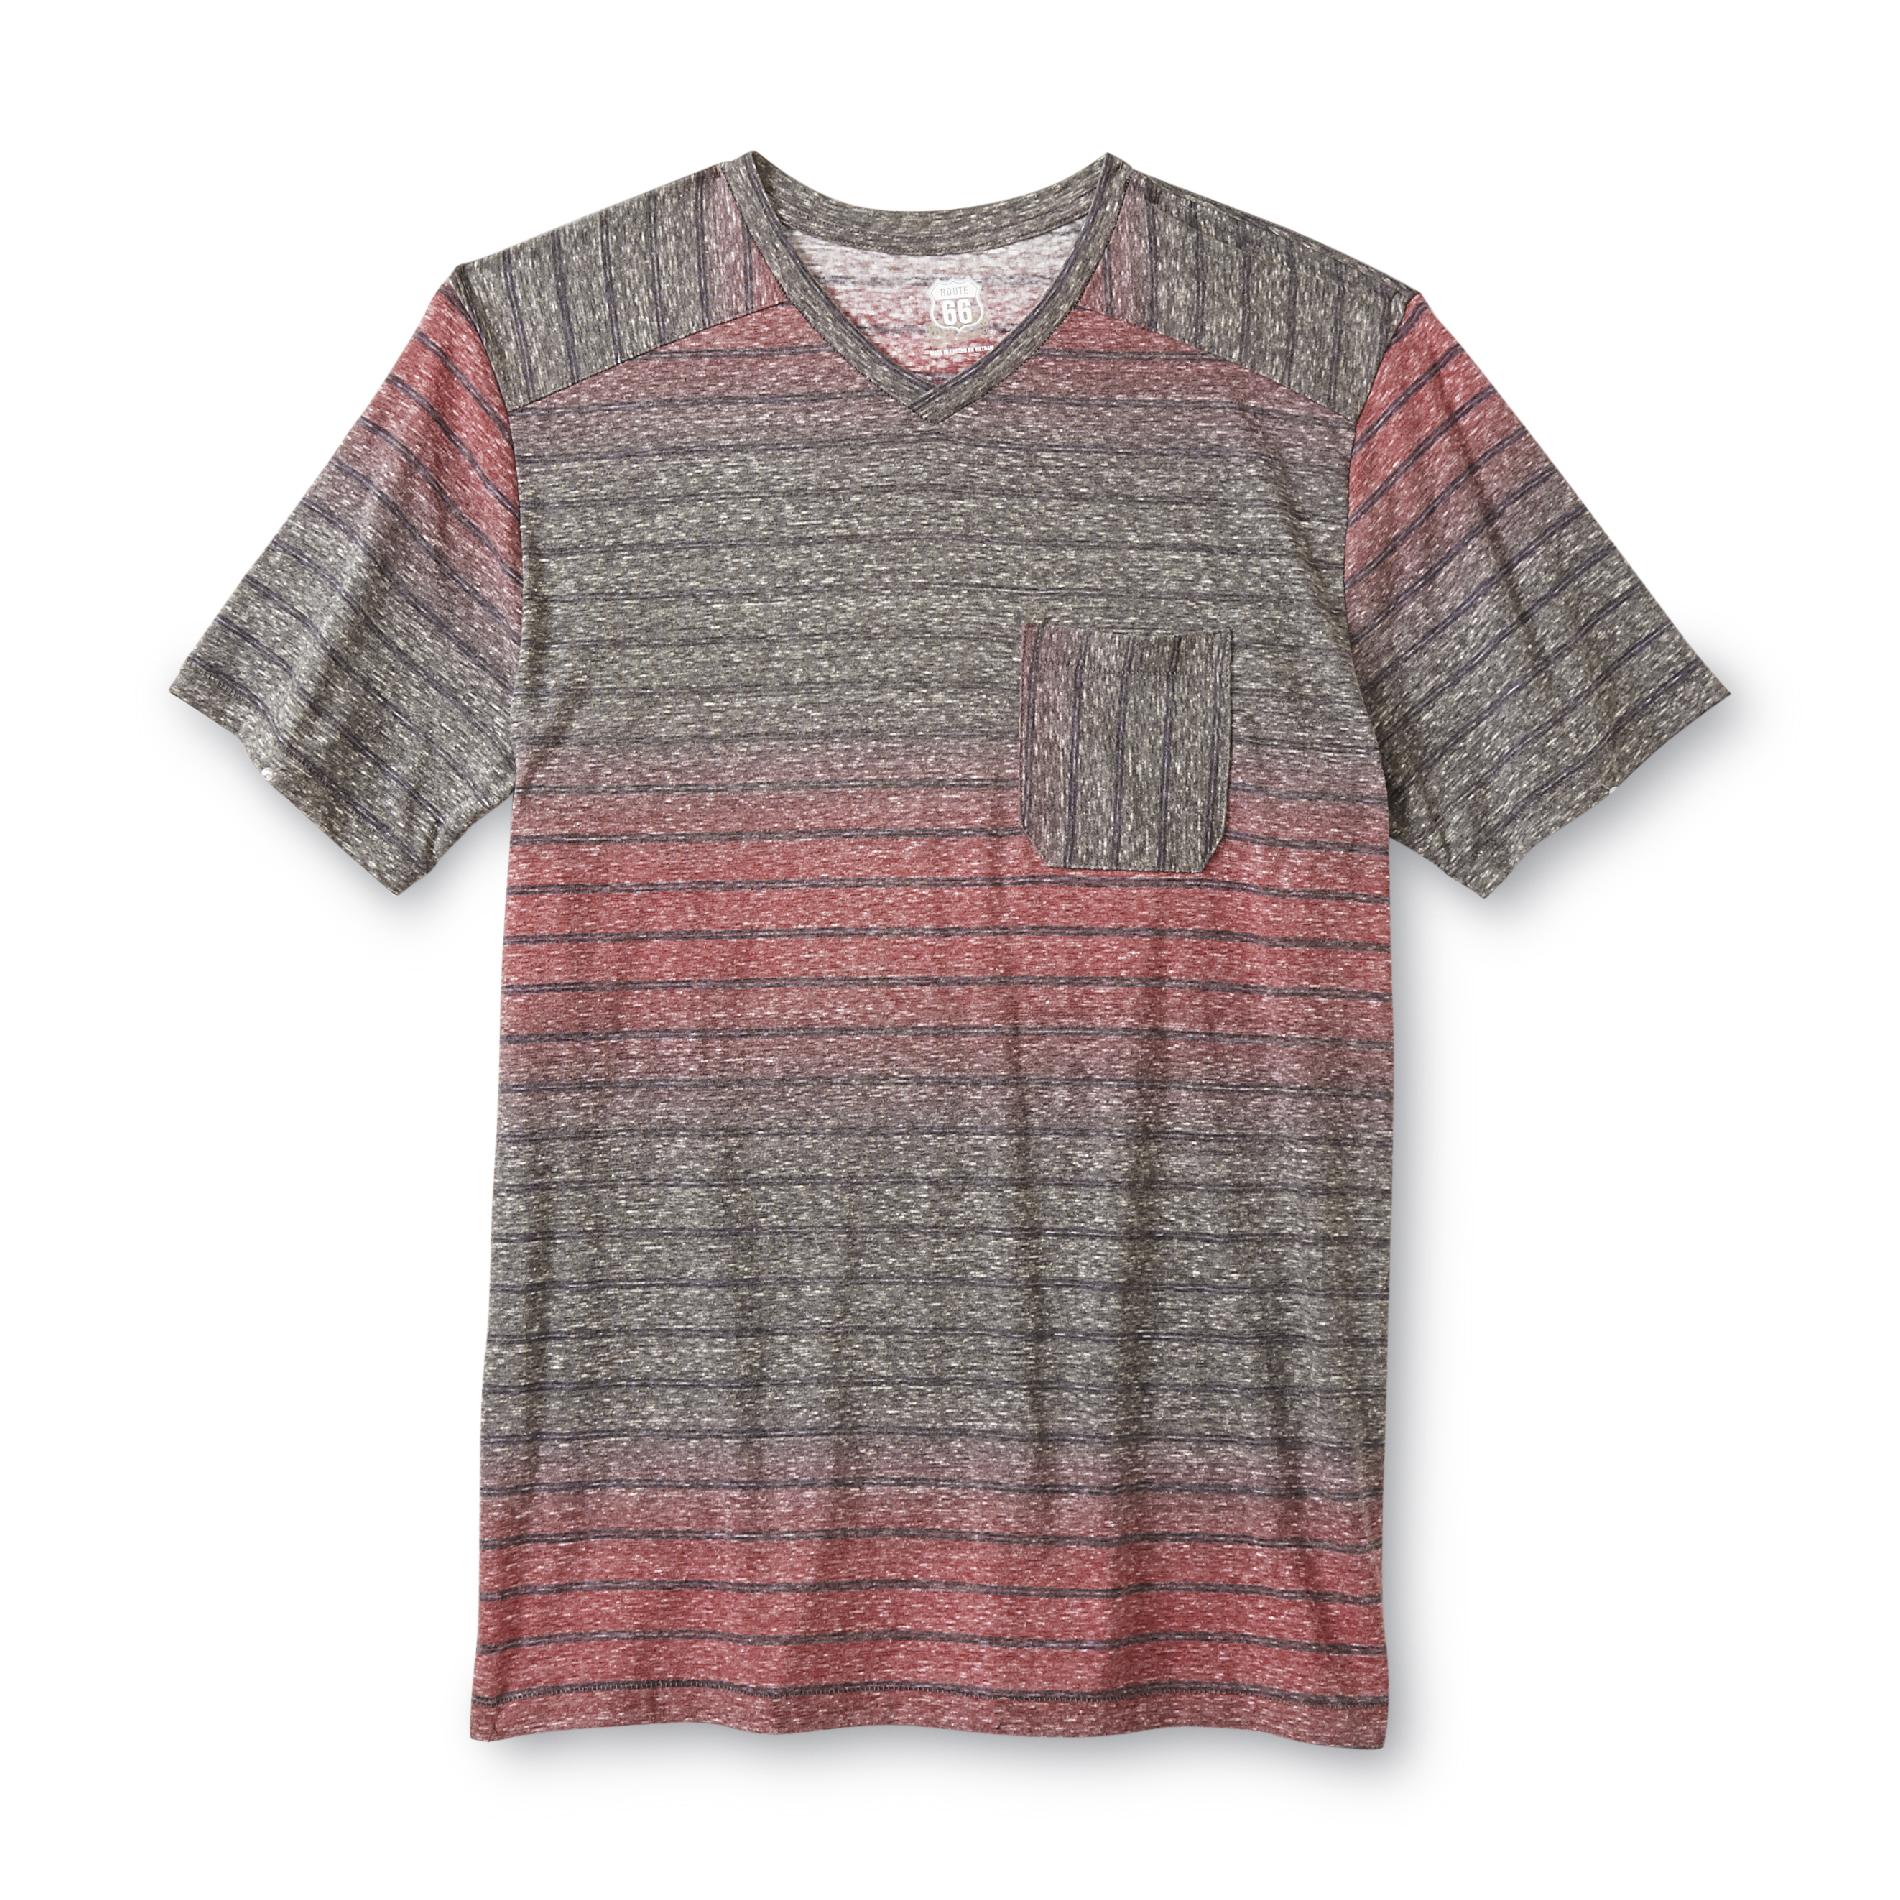 Route 66 Men's V-Neck T-Shirt - Striped